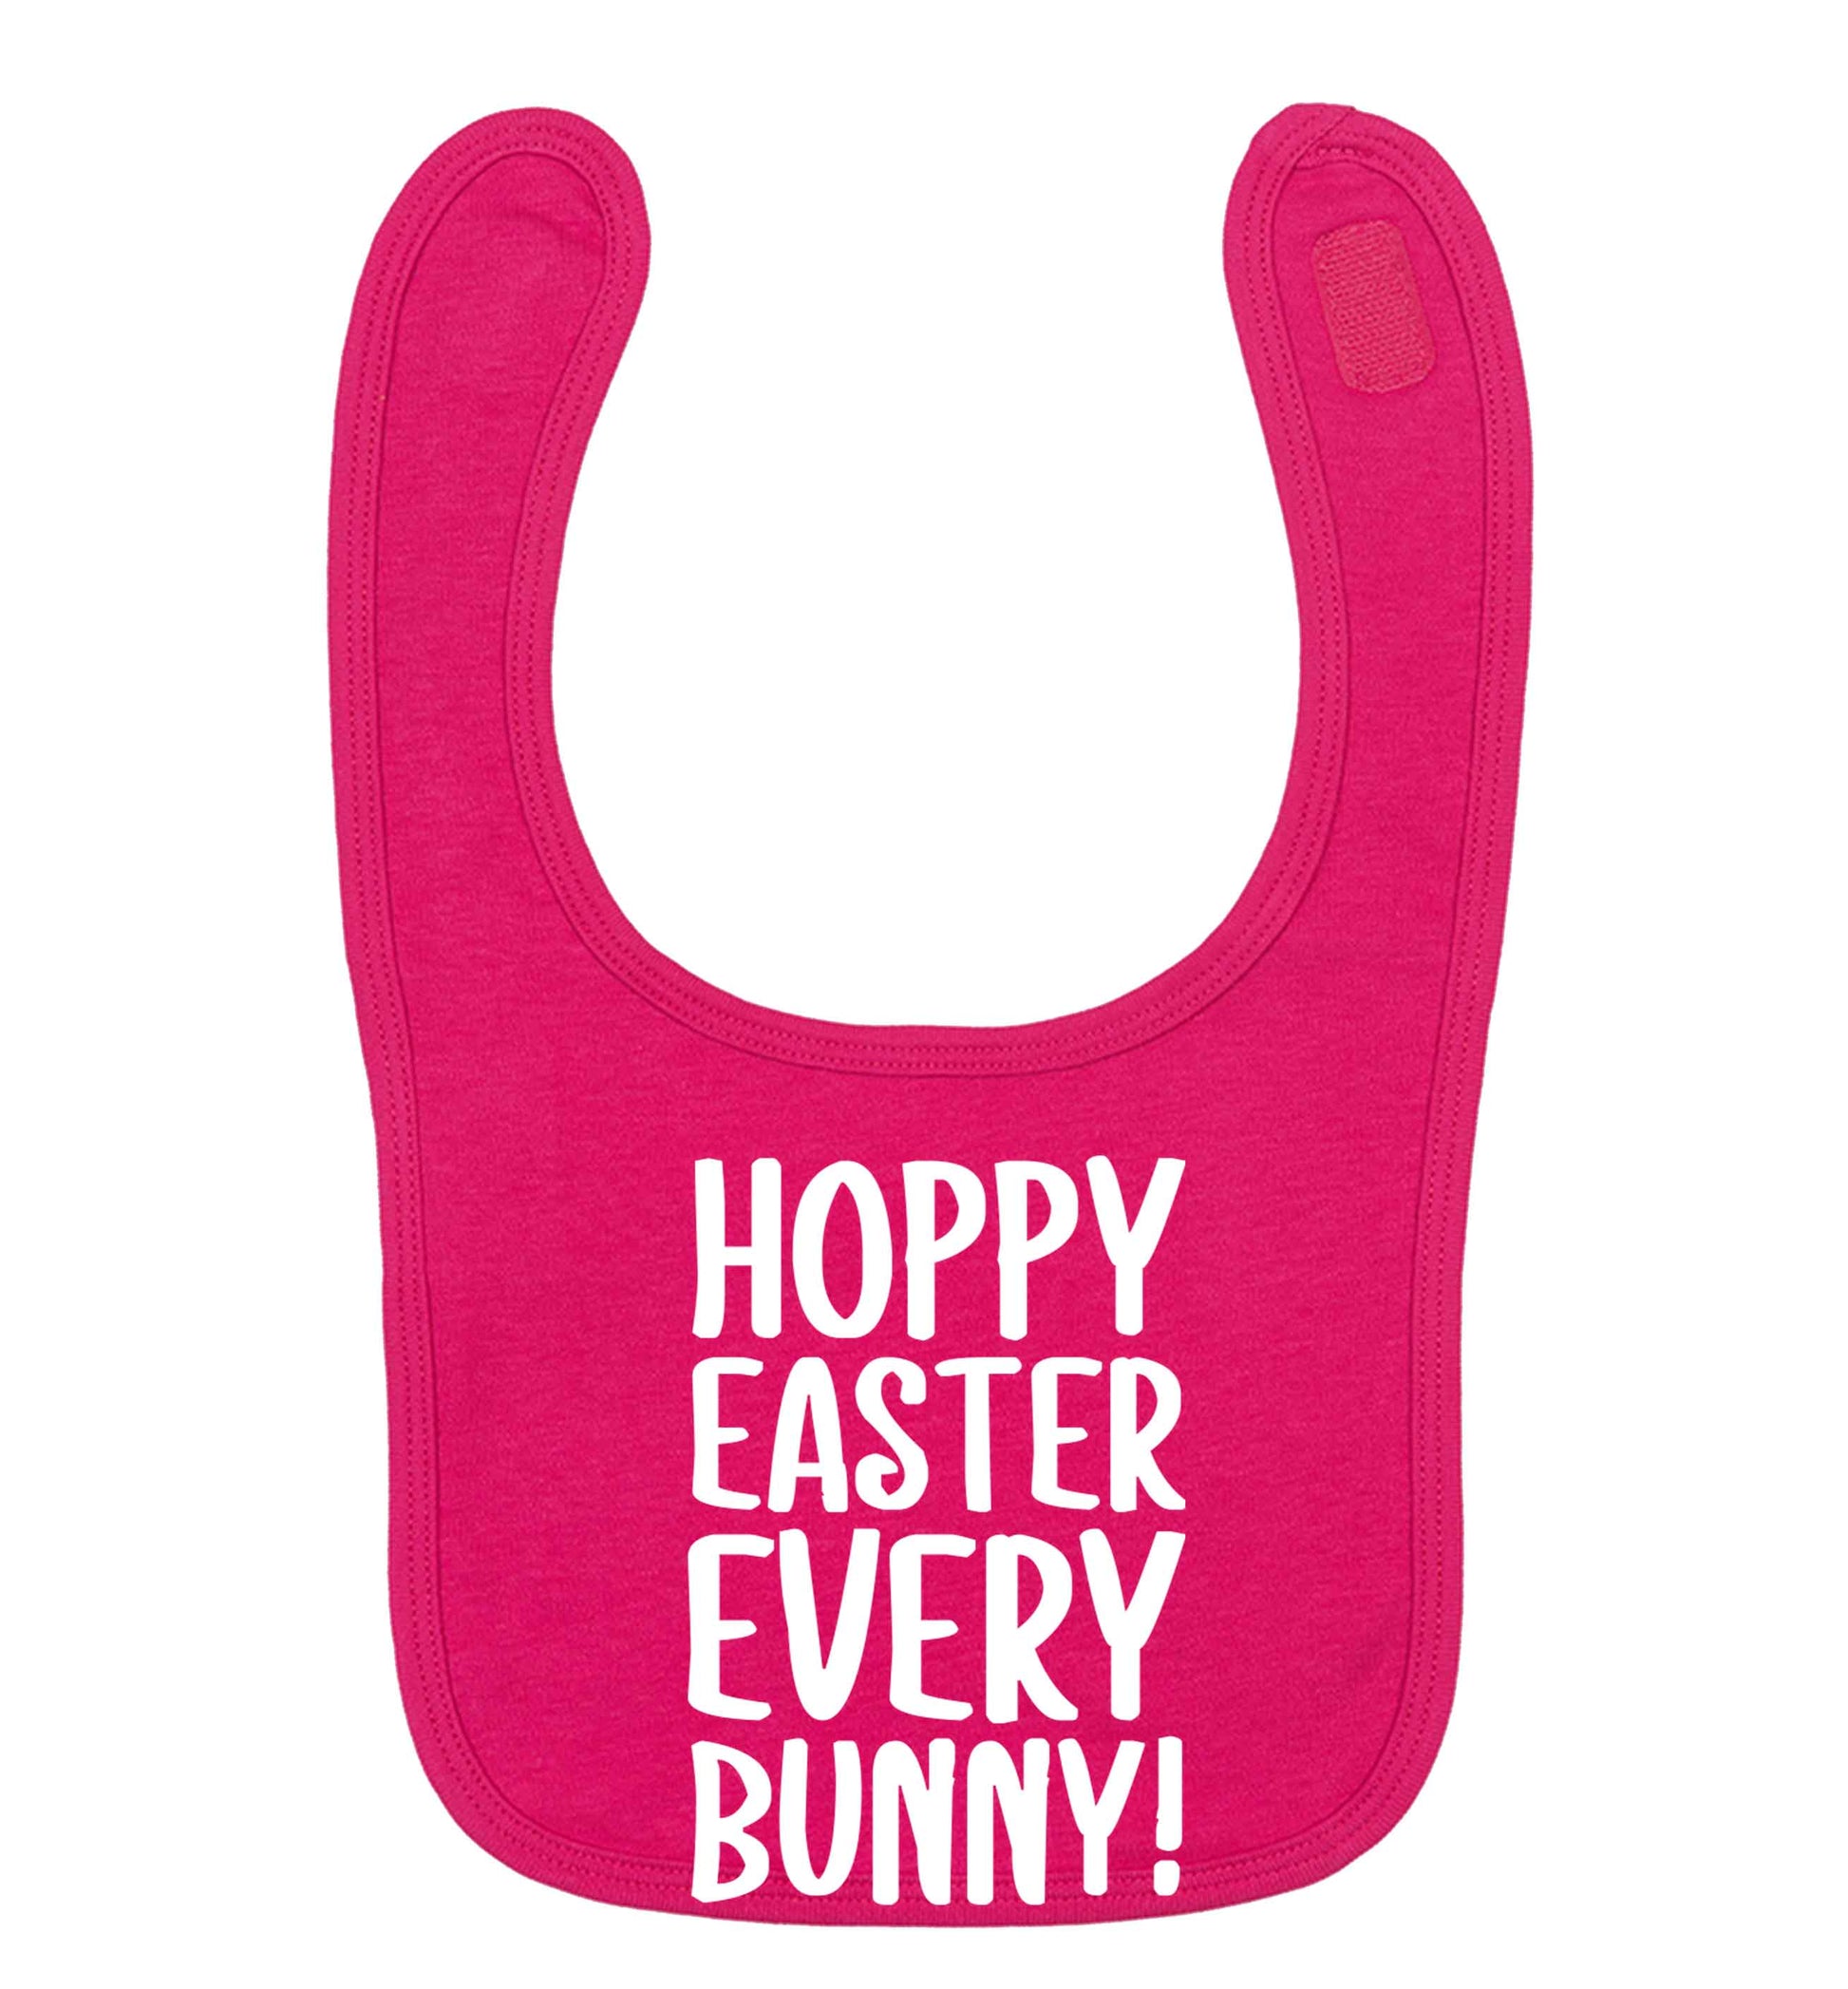 Hoppy Easter every bunny! dark pink baby bib